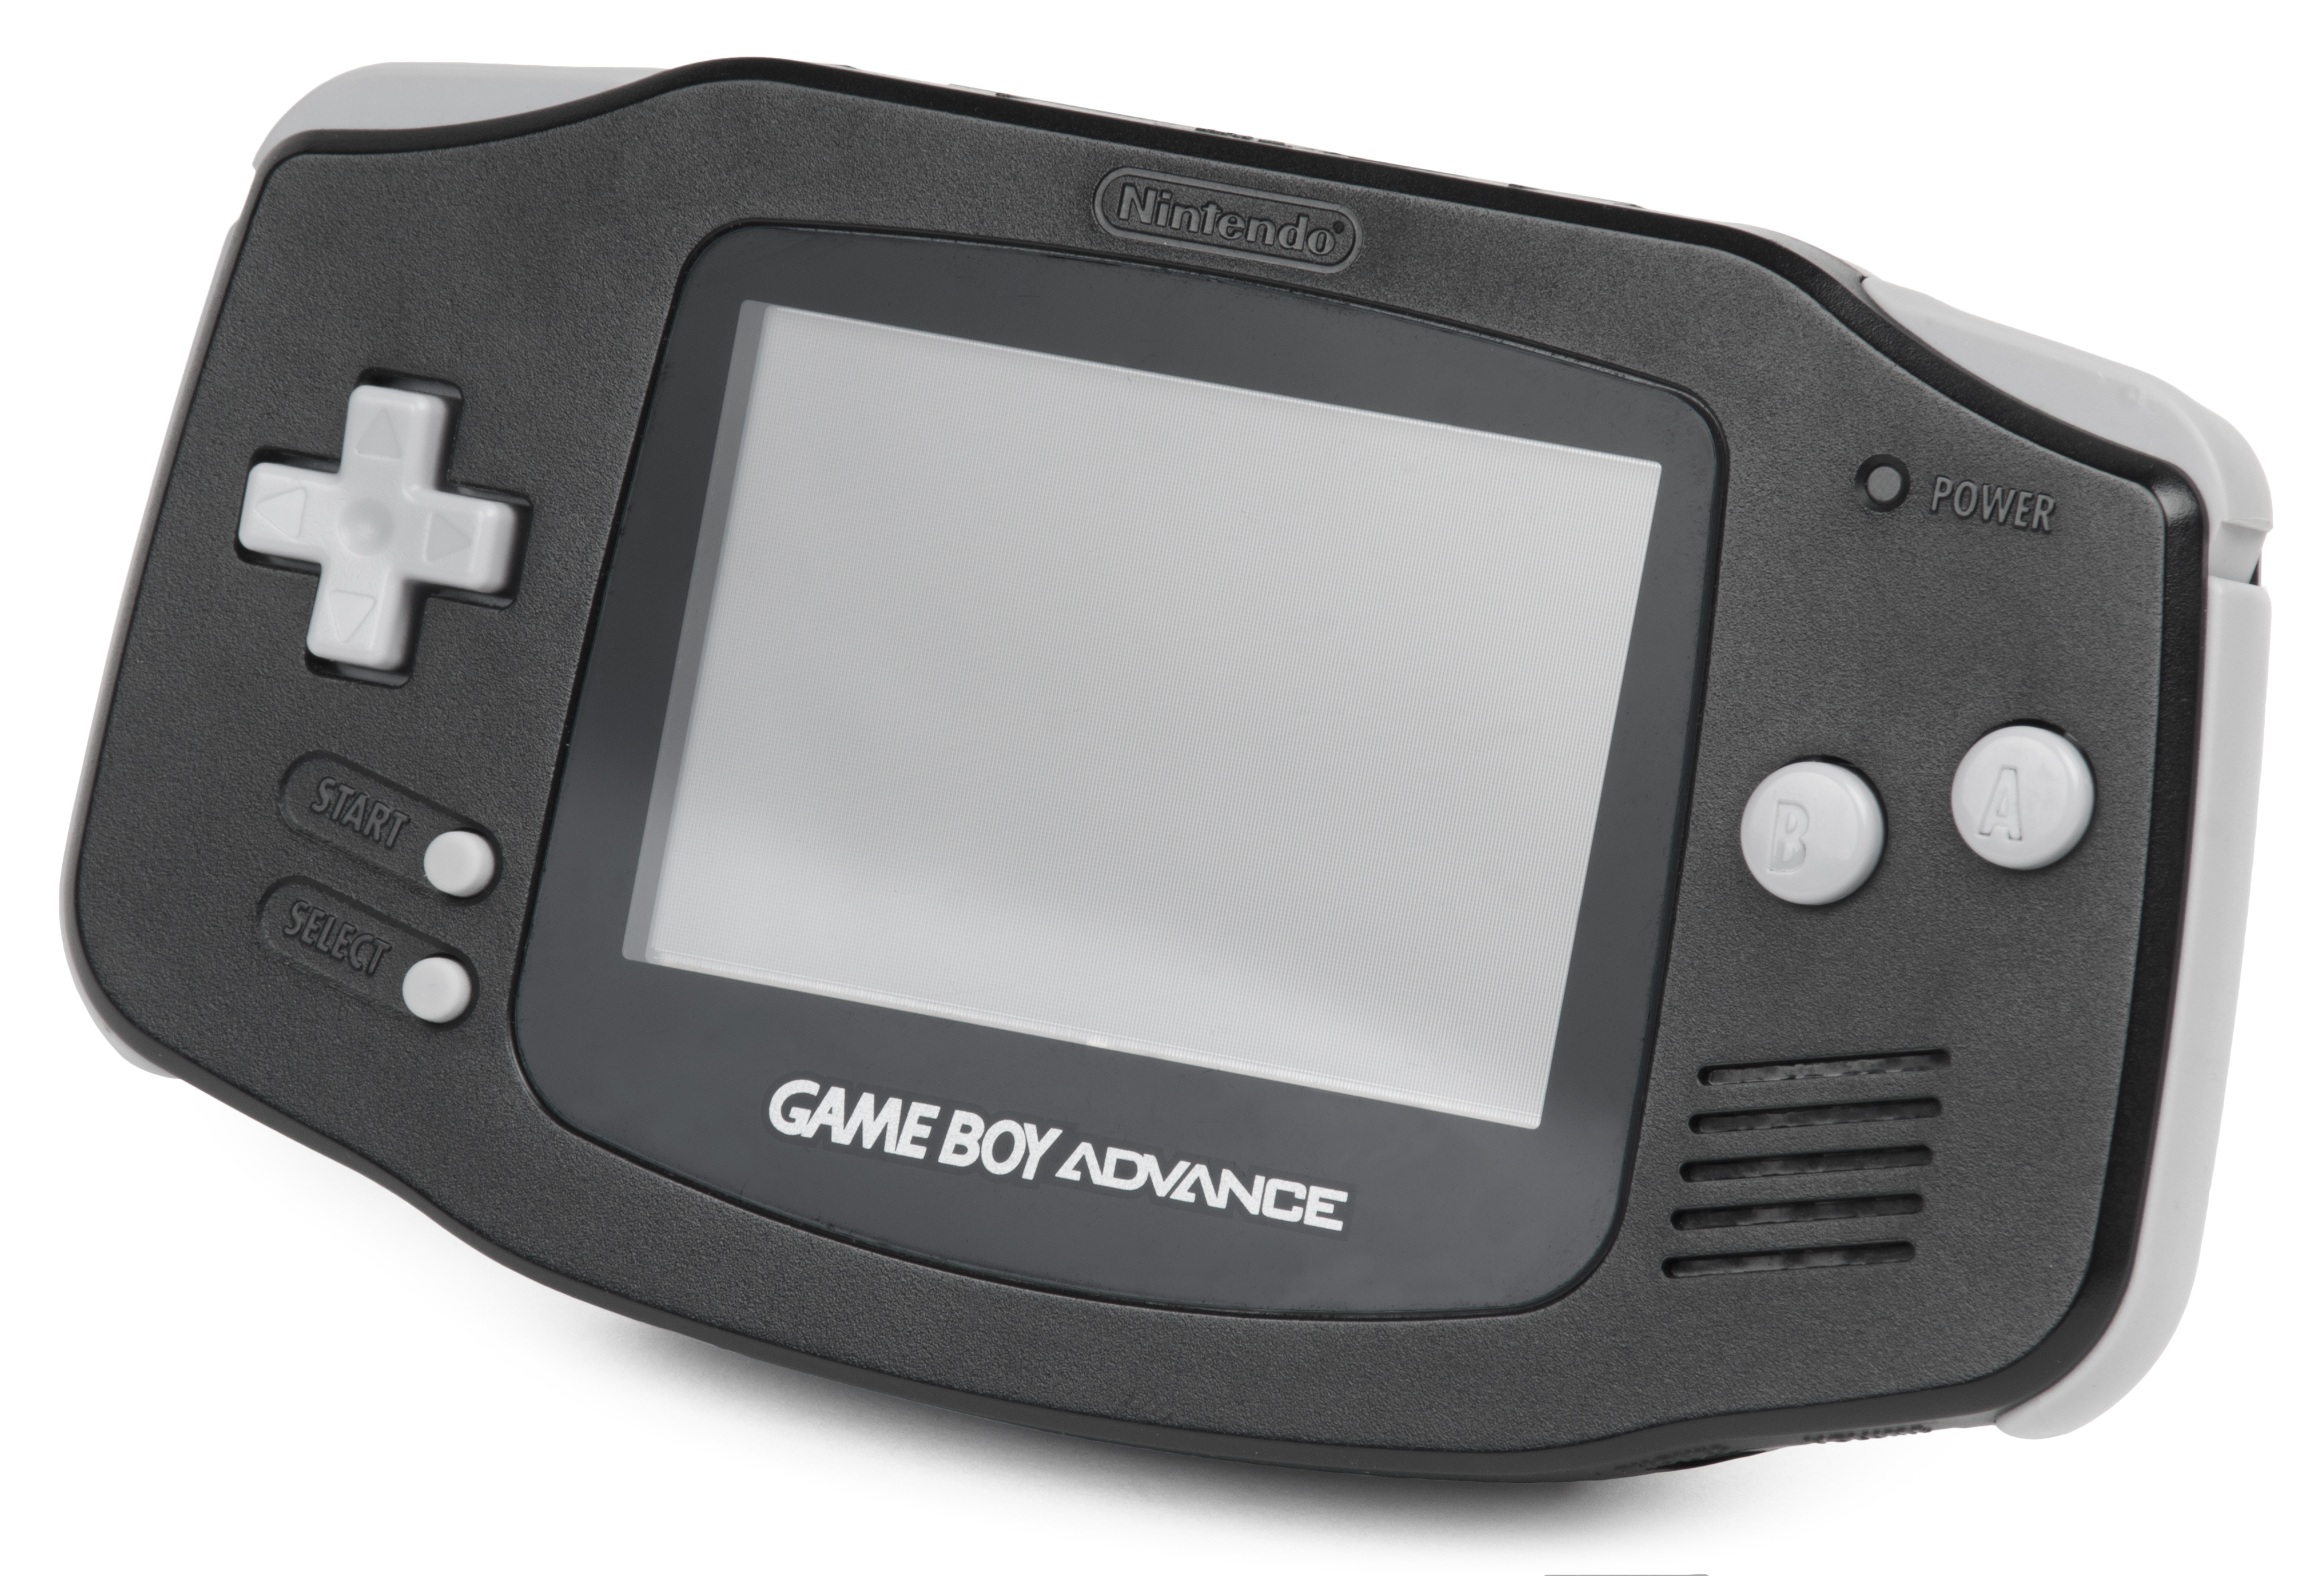 Nintendo Game Boy Advanced (GBA)